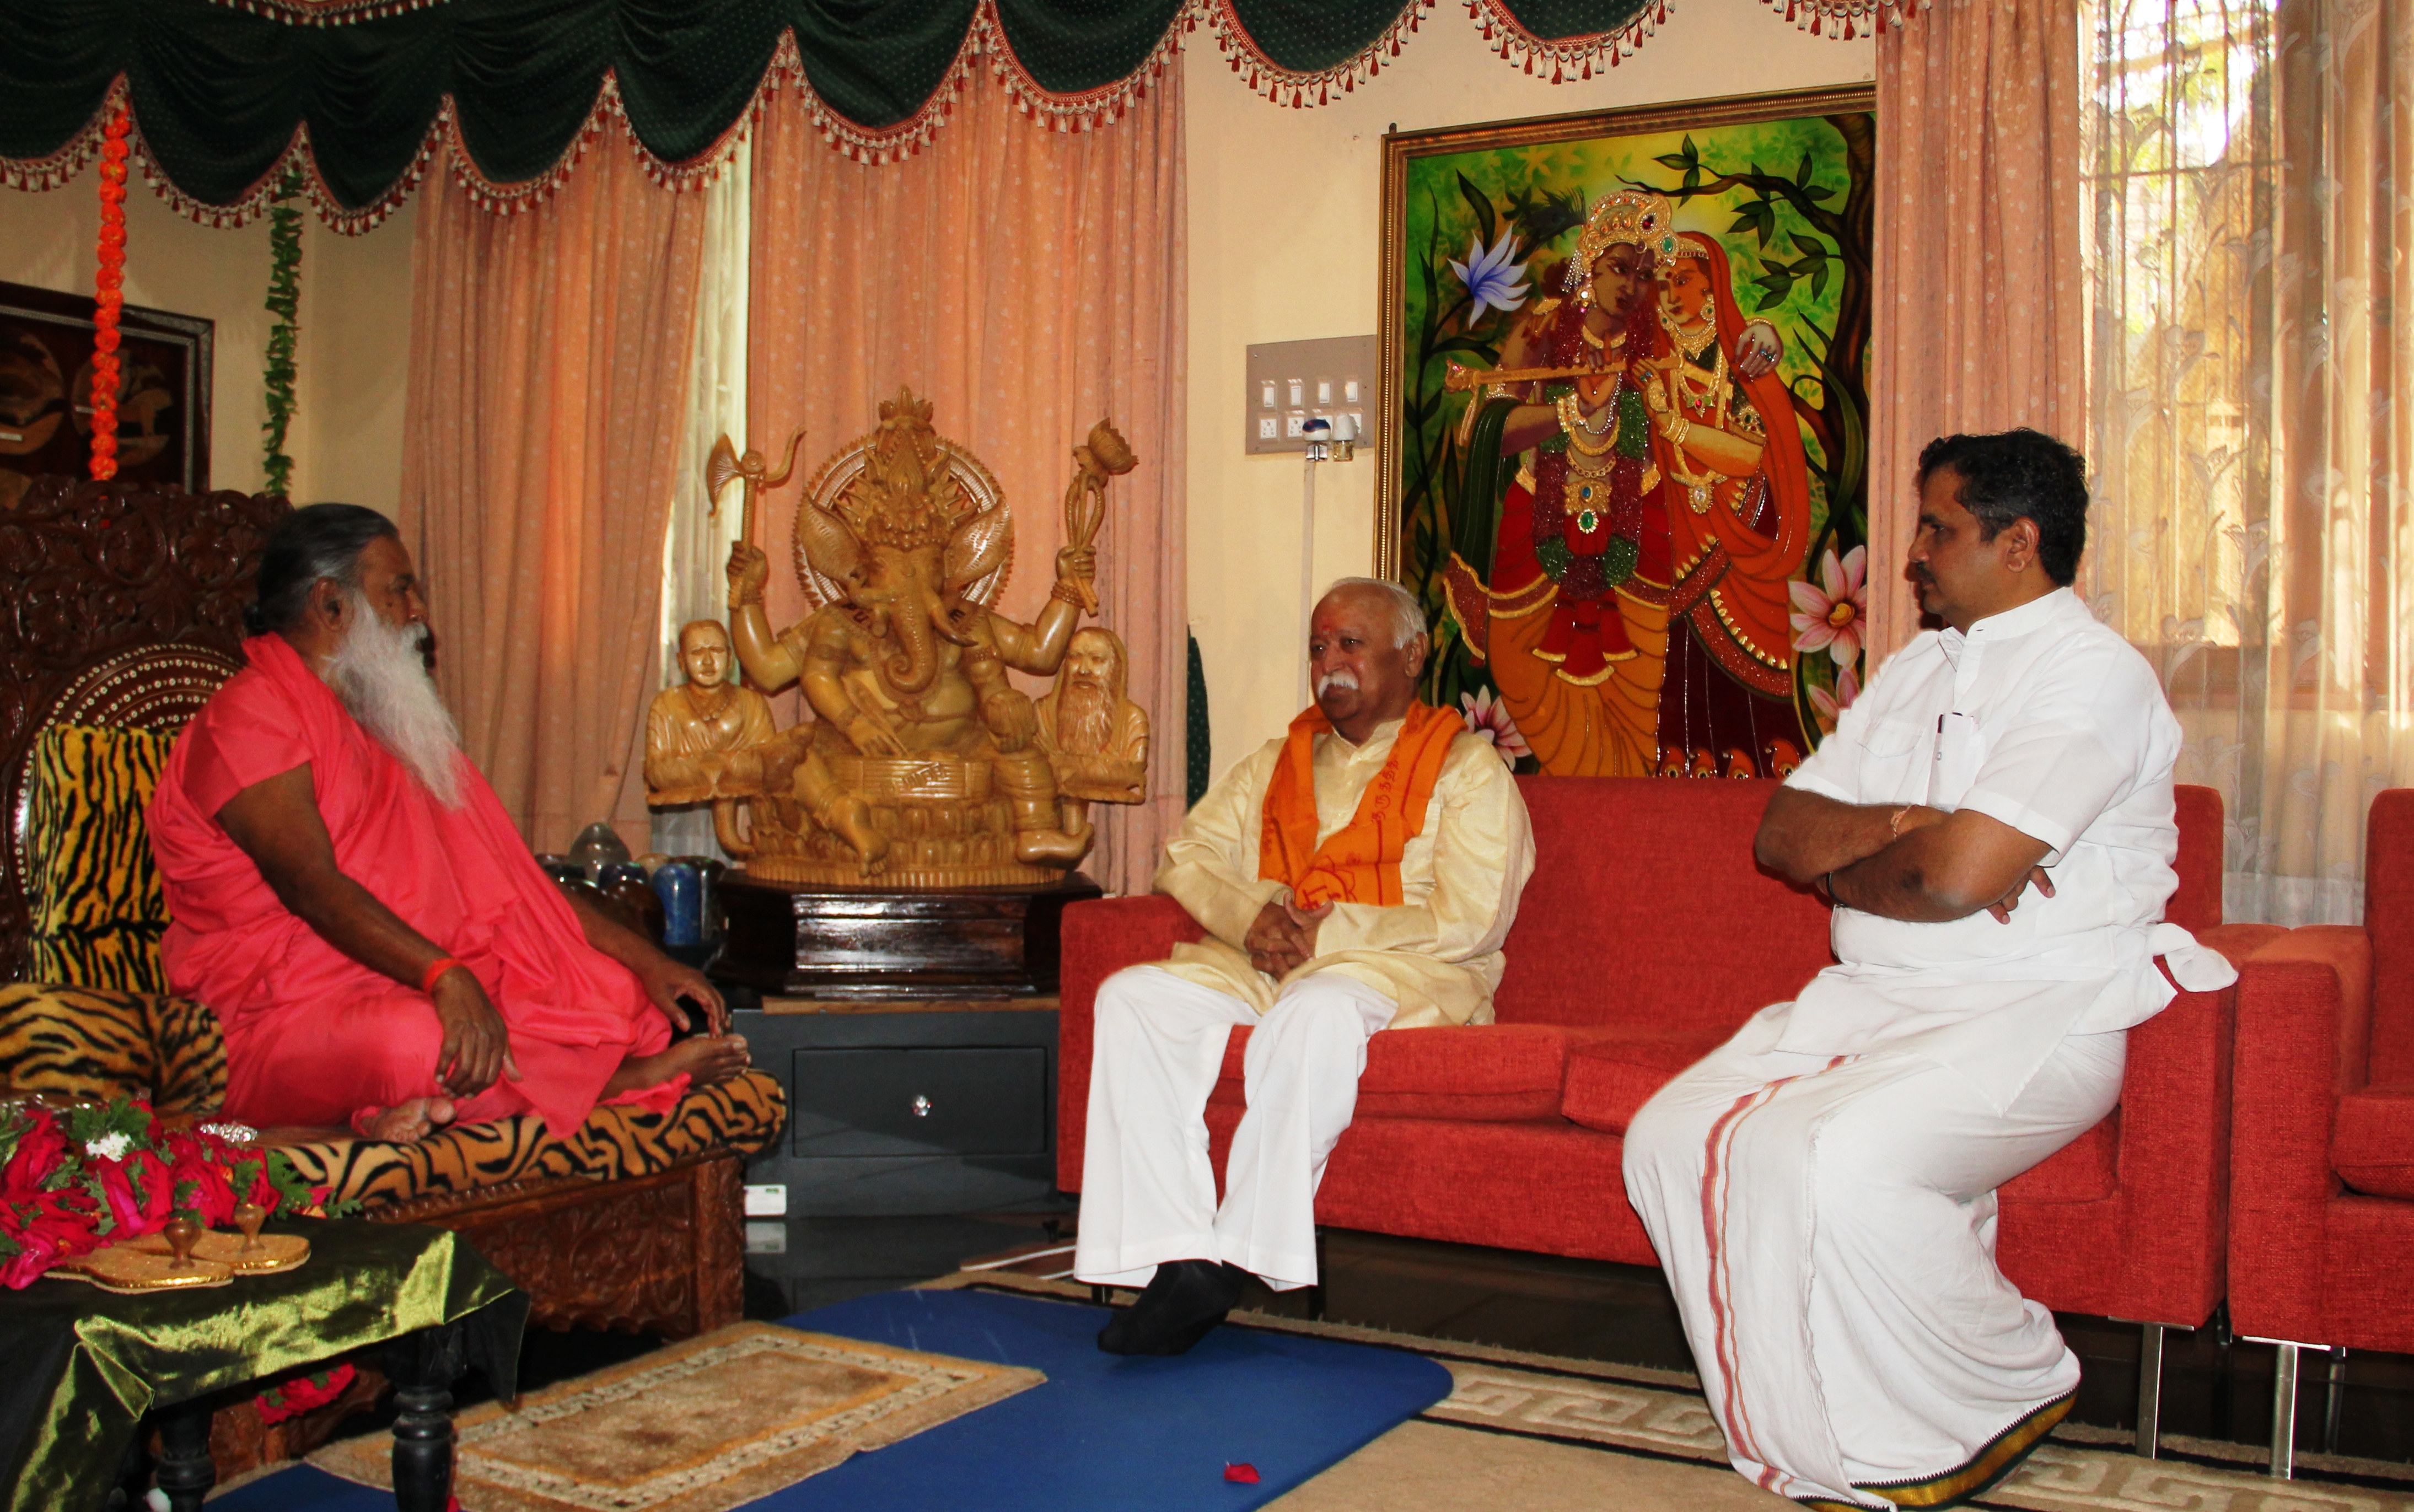 RSS Sarasanghachalak Mohanji Bhagwat met Sri Ganapati Sacchidananda Swamiji at his Ashram in Mysuru February 01, 2015